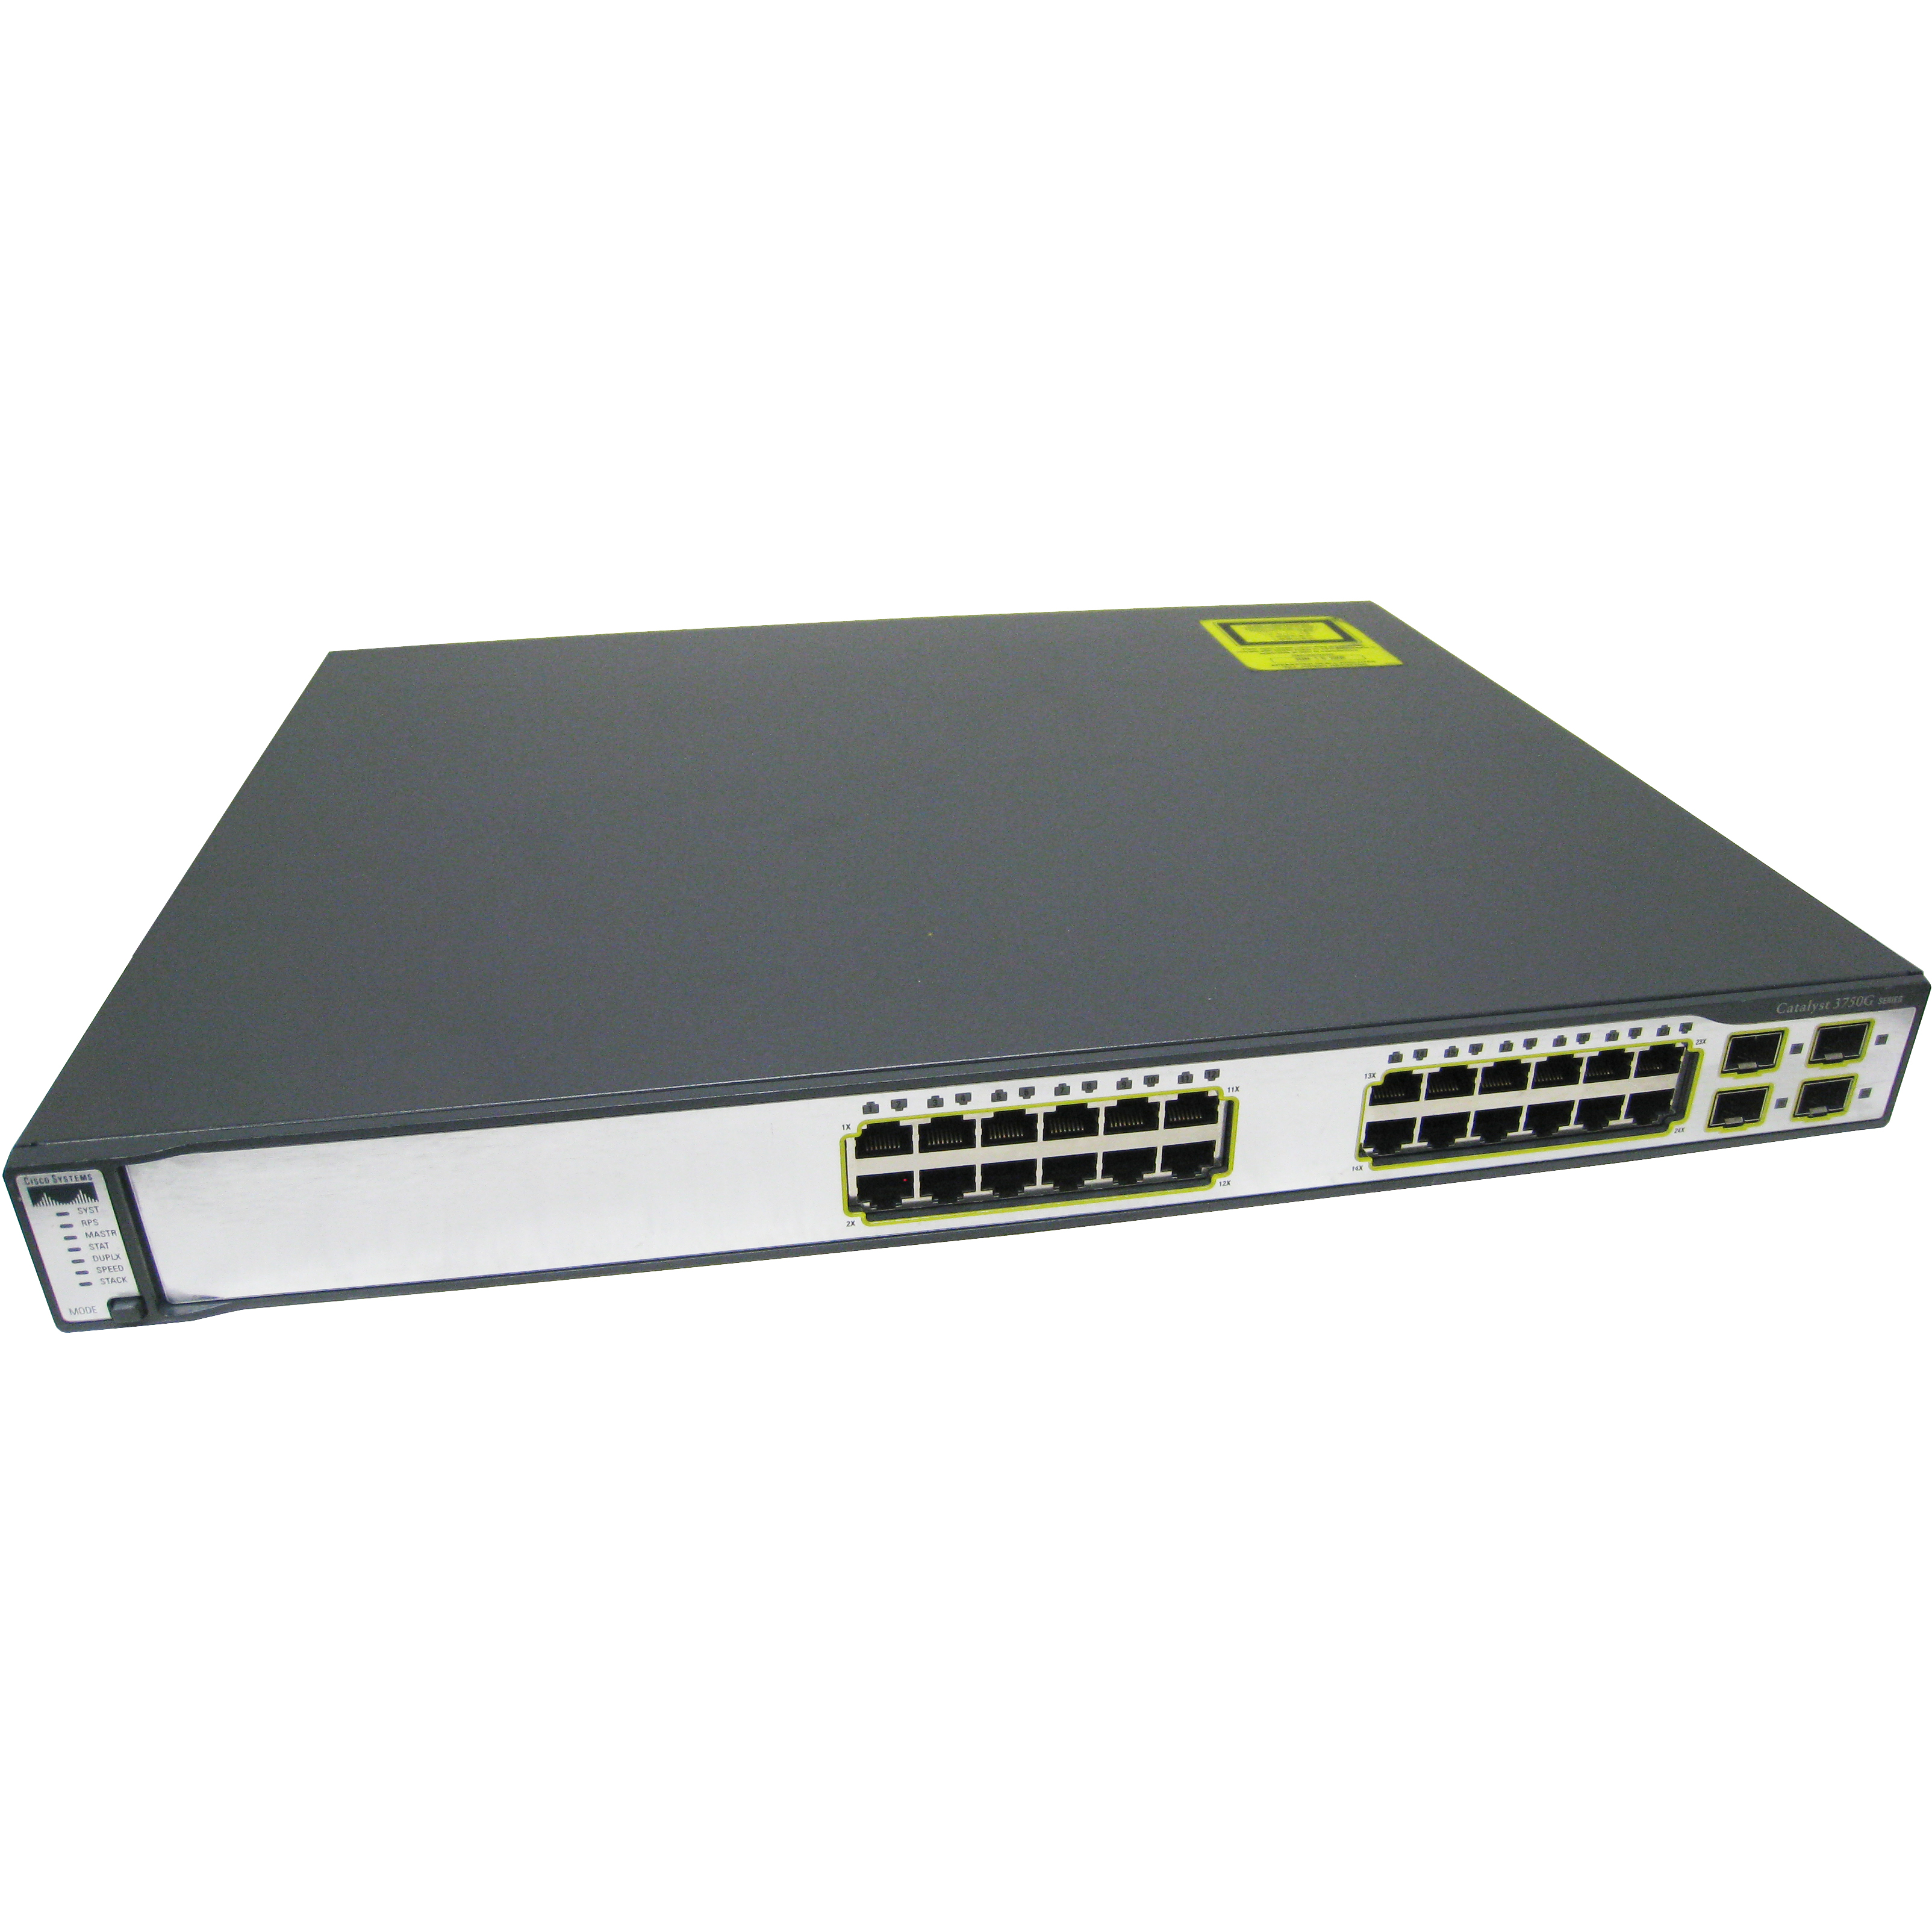 Cisco WS-C3750G-24PS-S